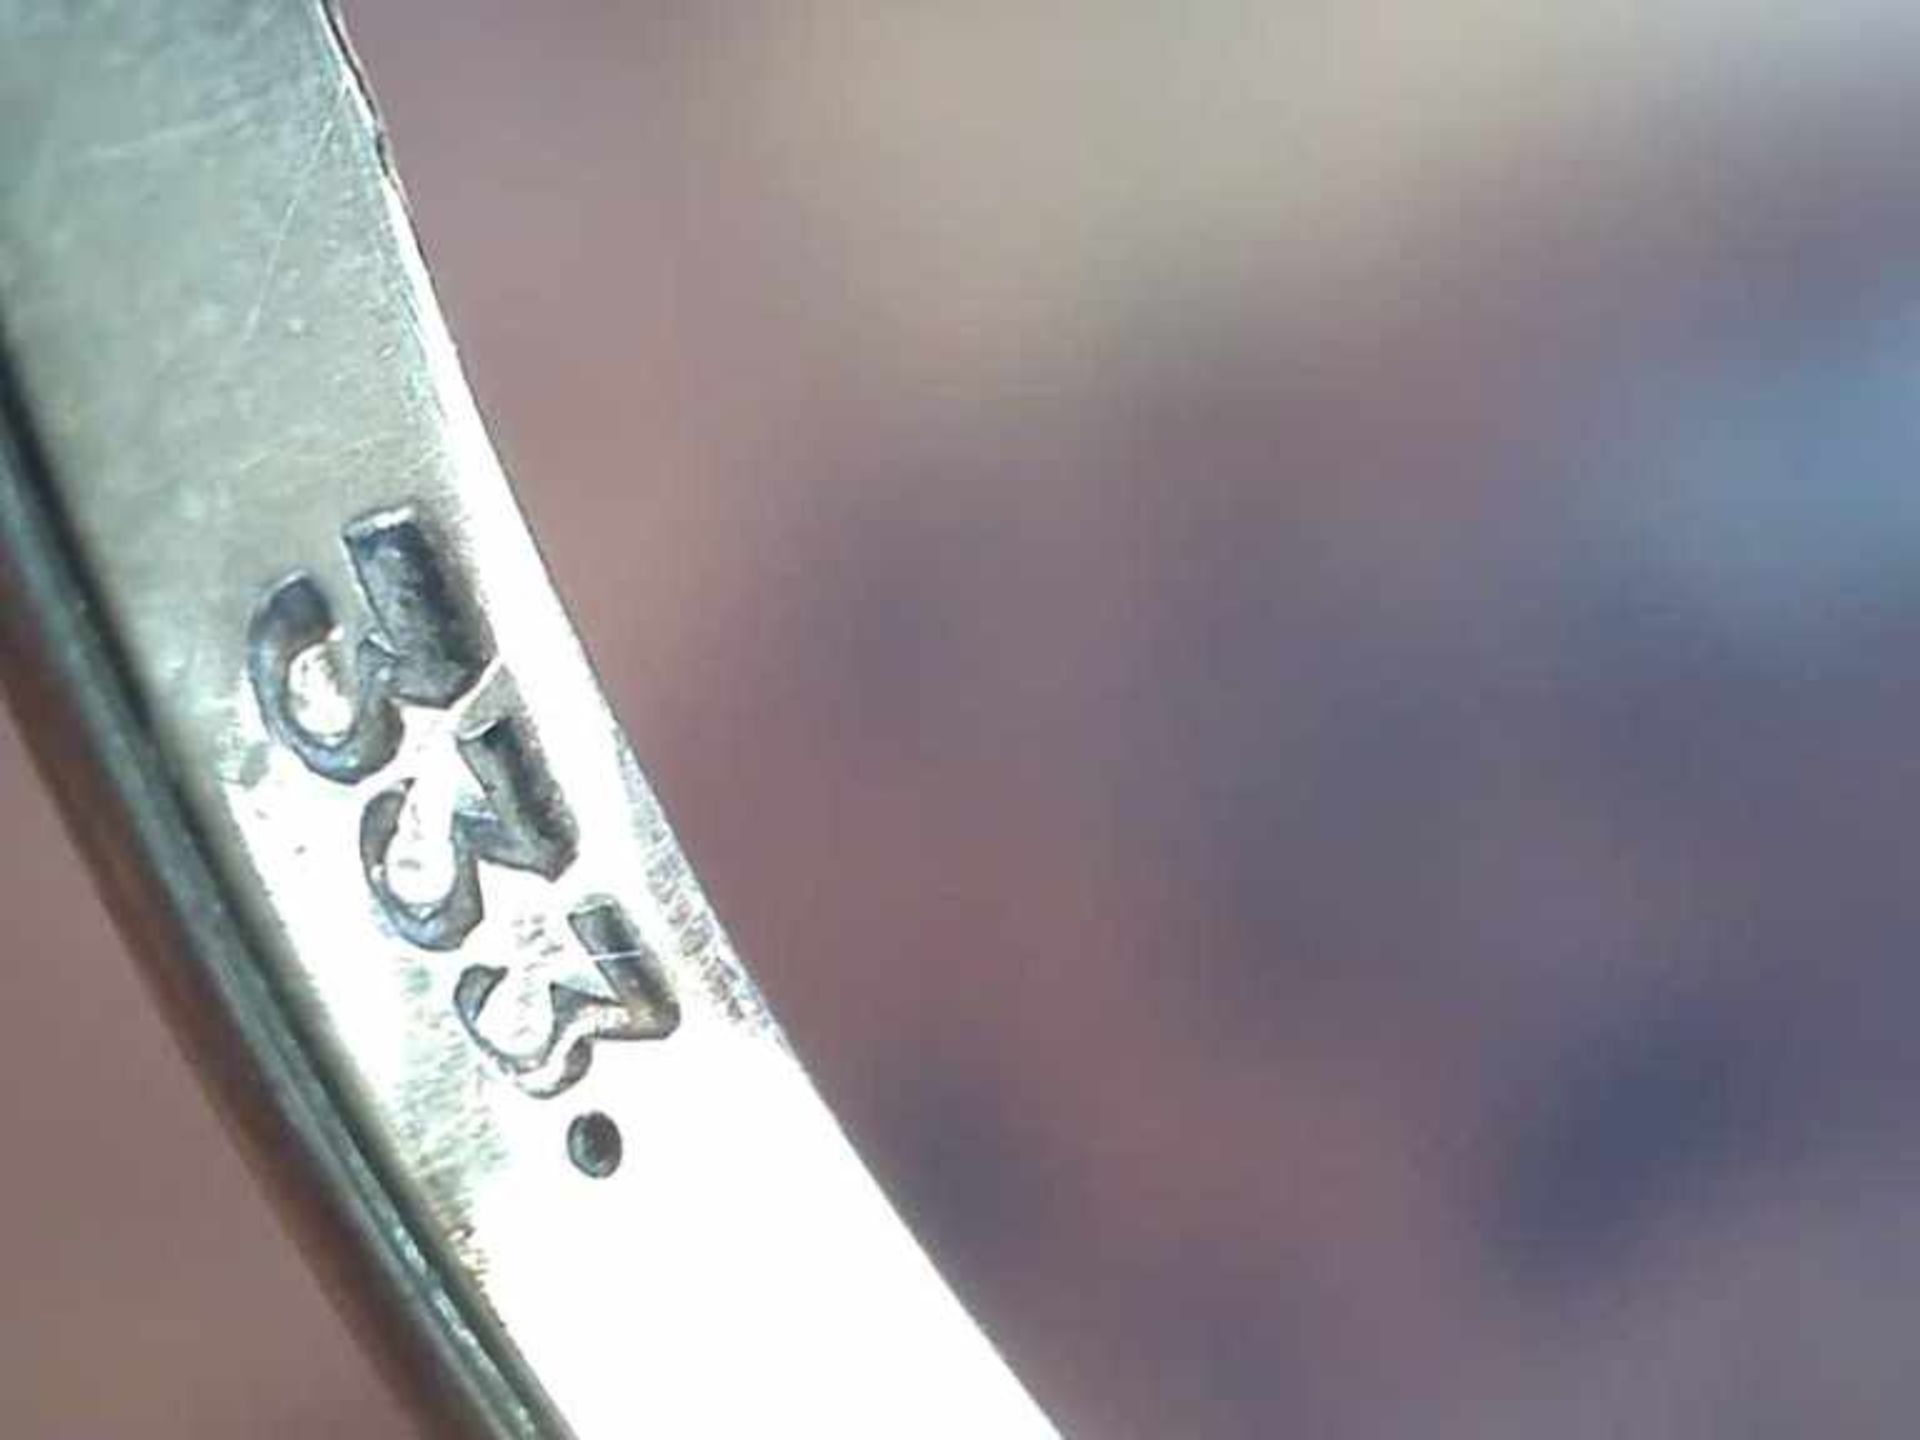 Damenring 333er GG, 3,5 g, ovaler Ringkopf mit einem Amethystcabochon, RG 60 - Bild 2 aus 2